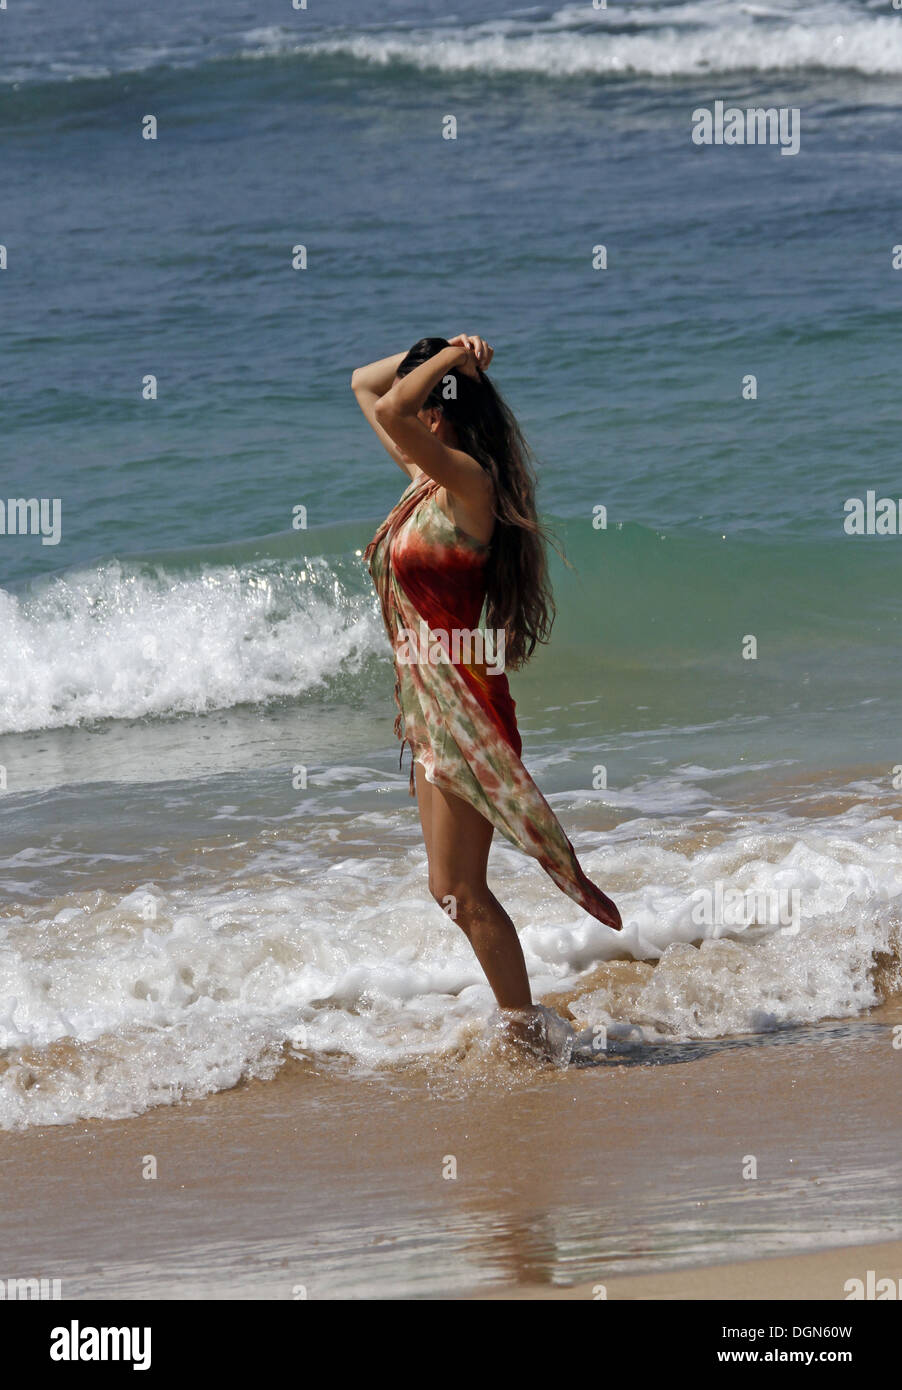 SPANISH WOMAN IN INDIAN OCEAN MIDIGAMA SRI LANKA 19 March 2013 Stock Photo